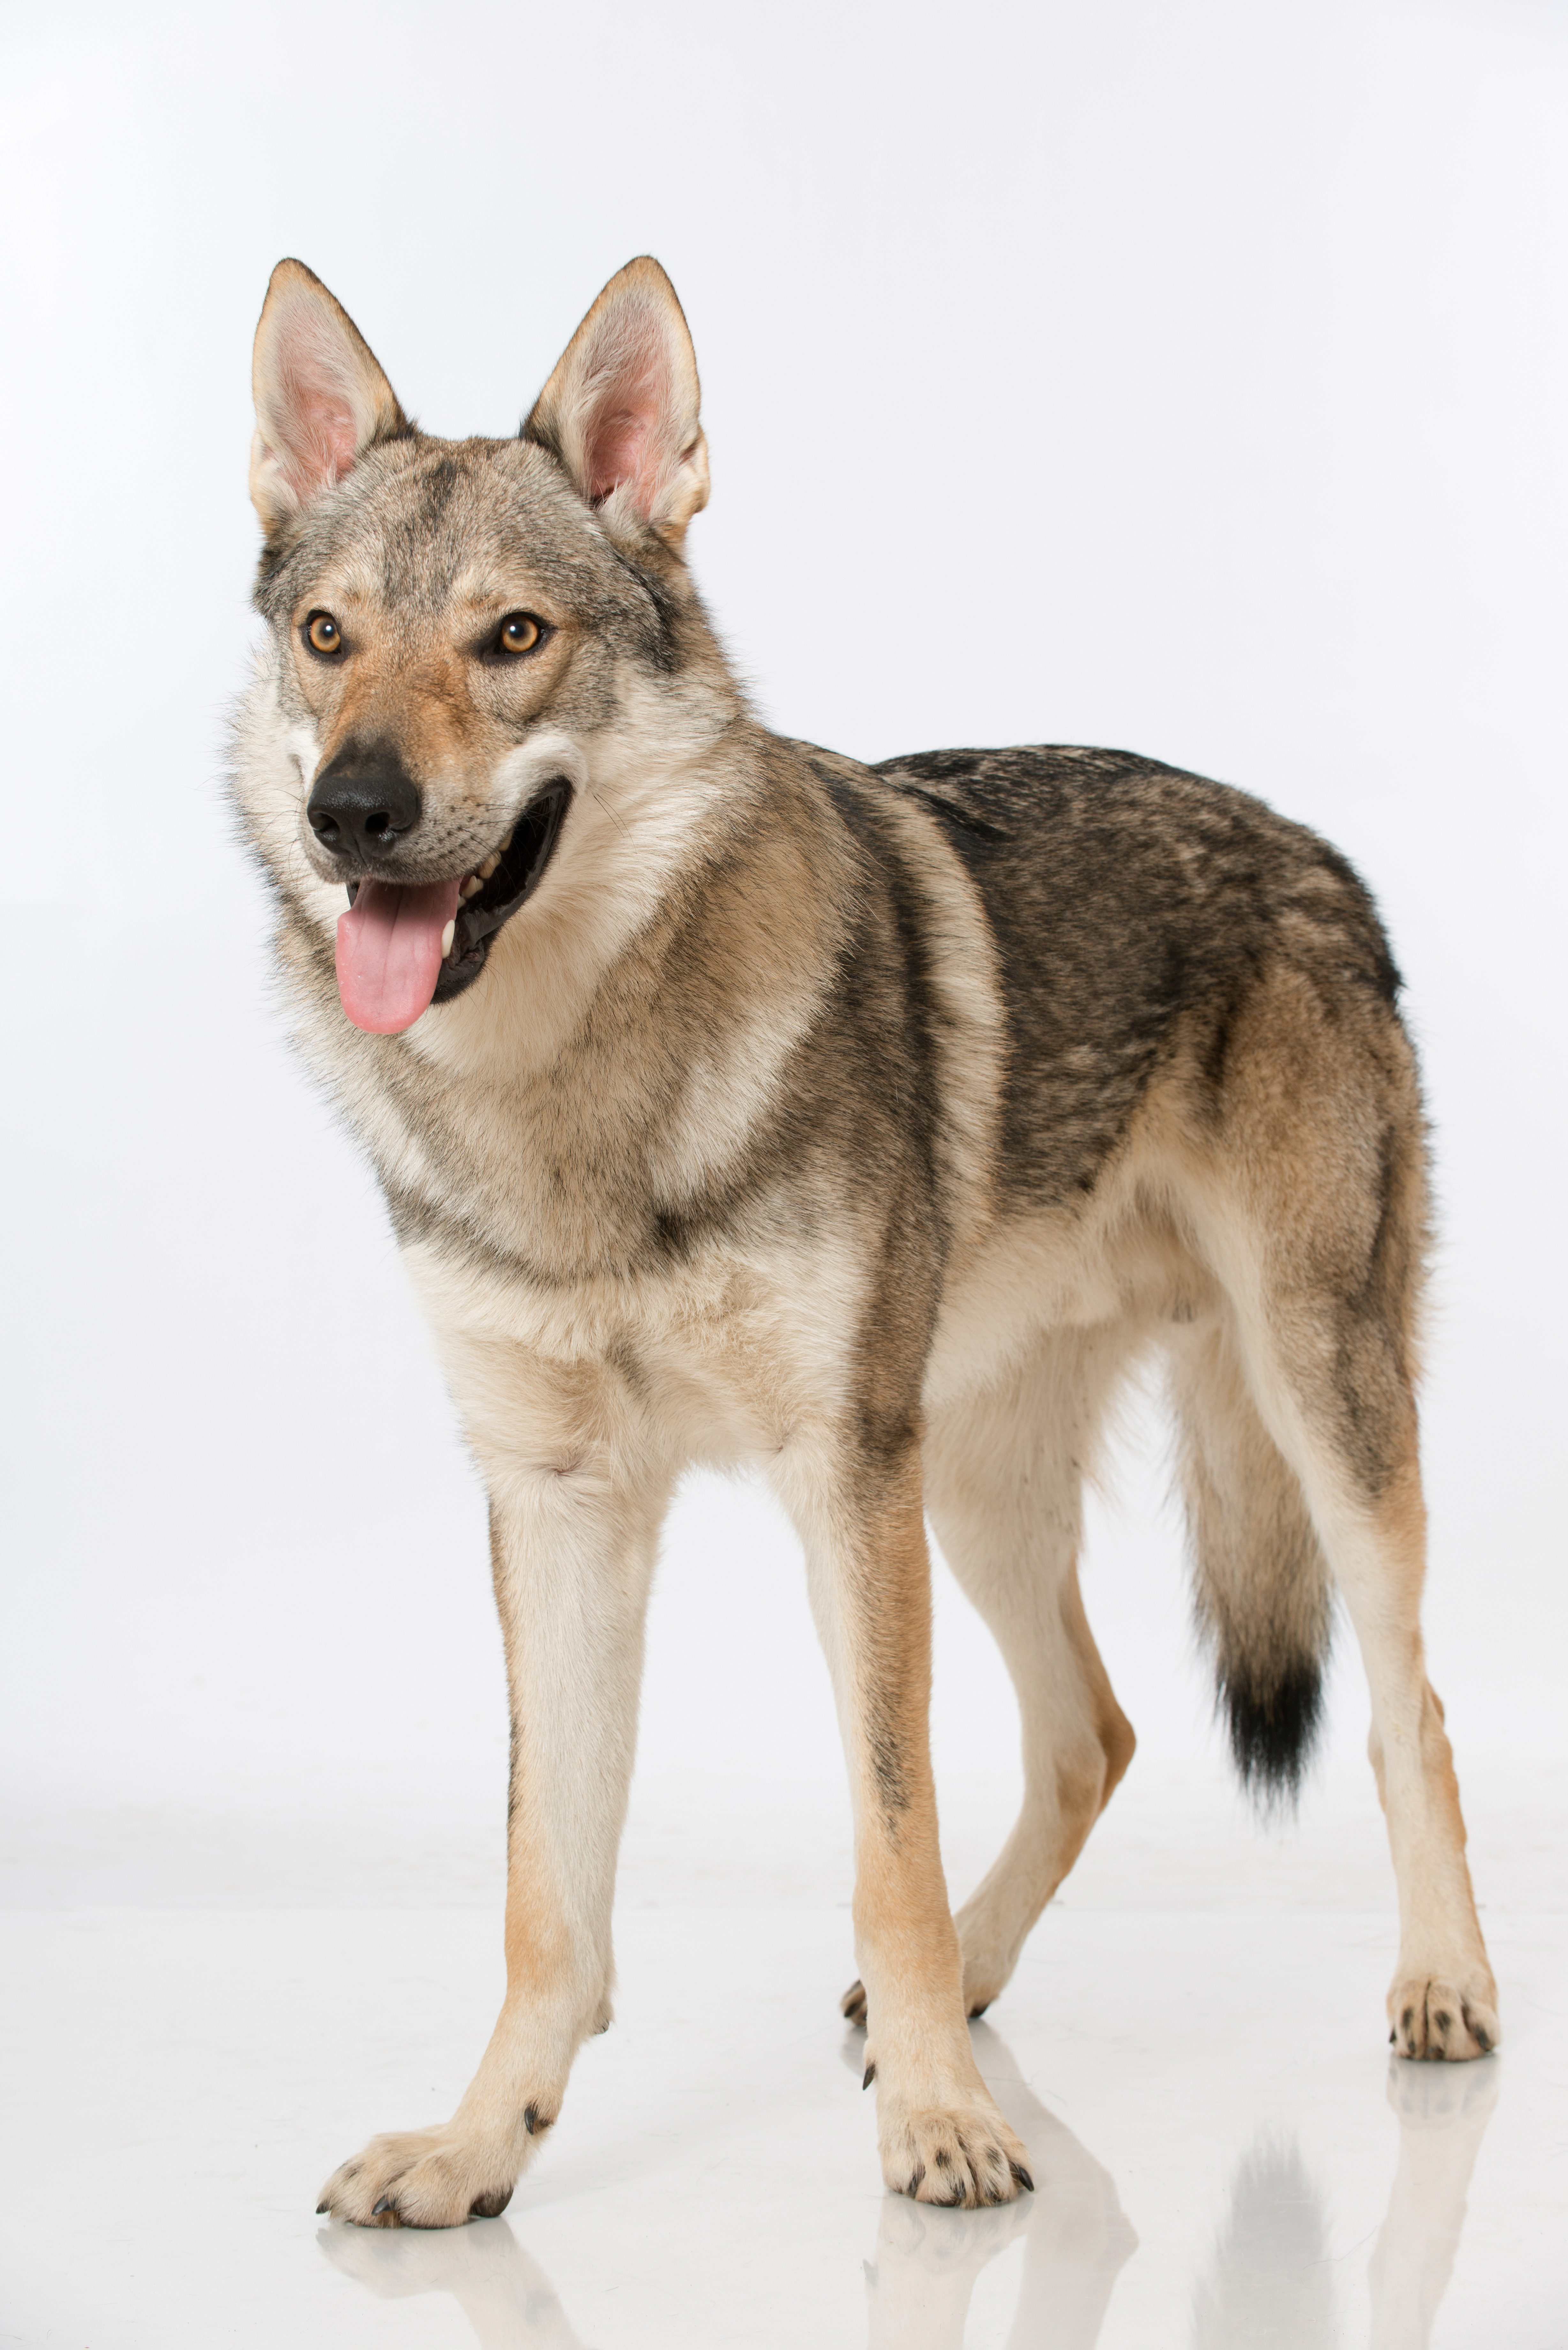 Czechoslovakian Wolfdog with Agouti coloration